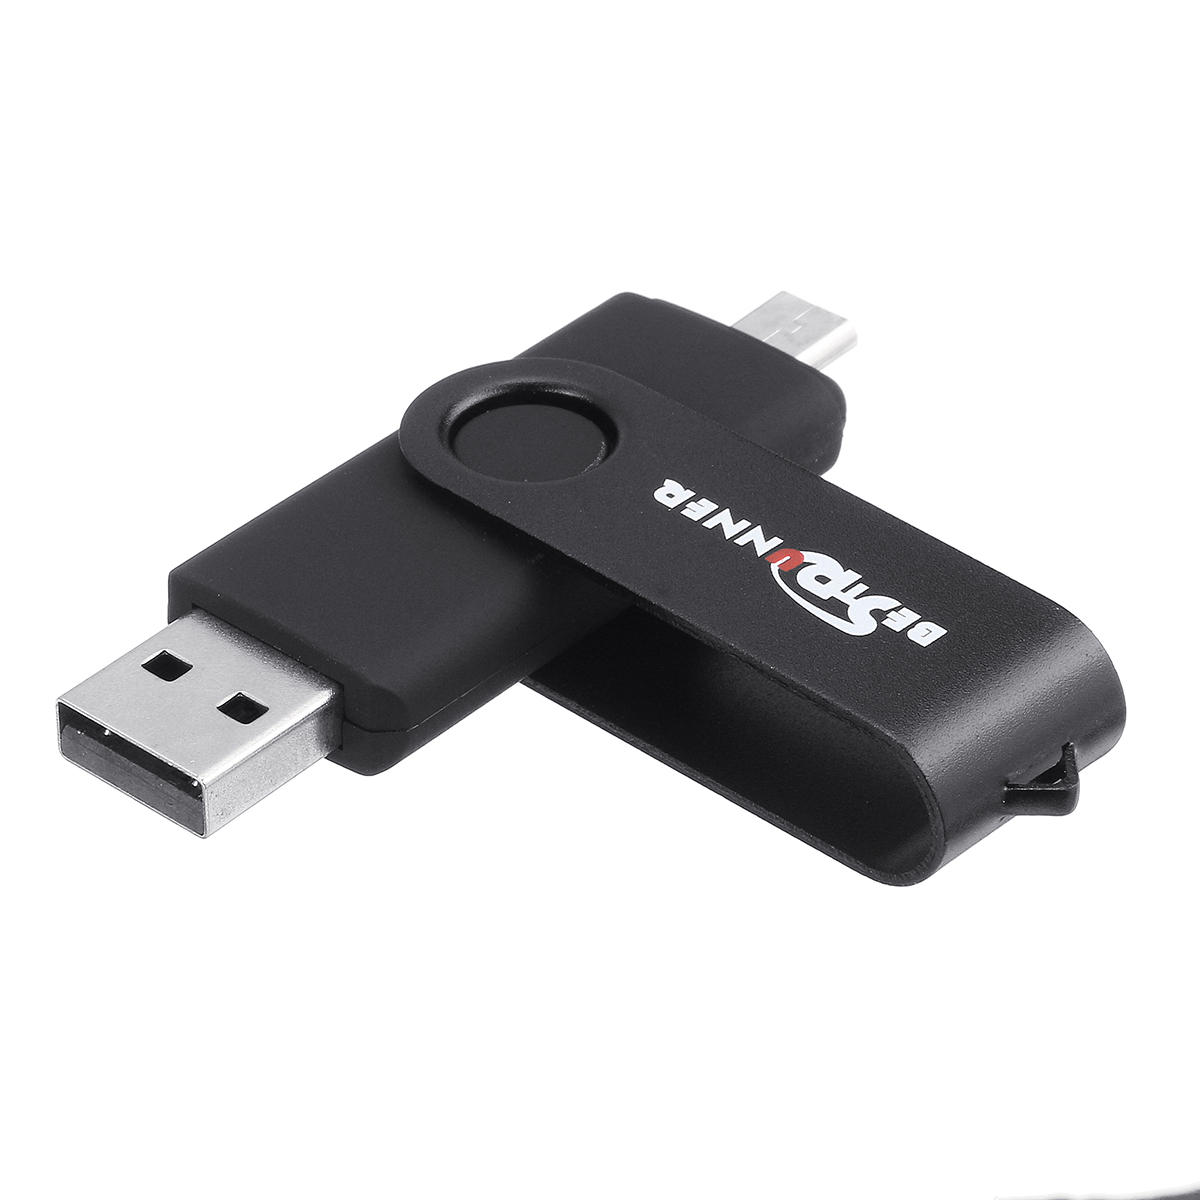 Bestrunner Type-C USB 2.0 64GB OTG Flash Drive U Disk 360 Degree Rotation for Type-C Smart Phone Tab